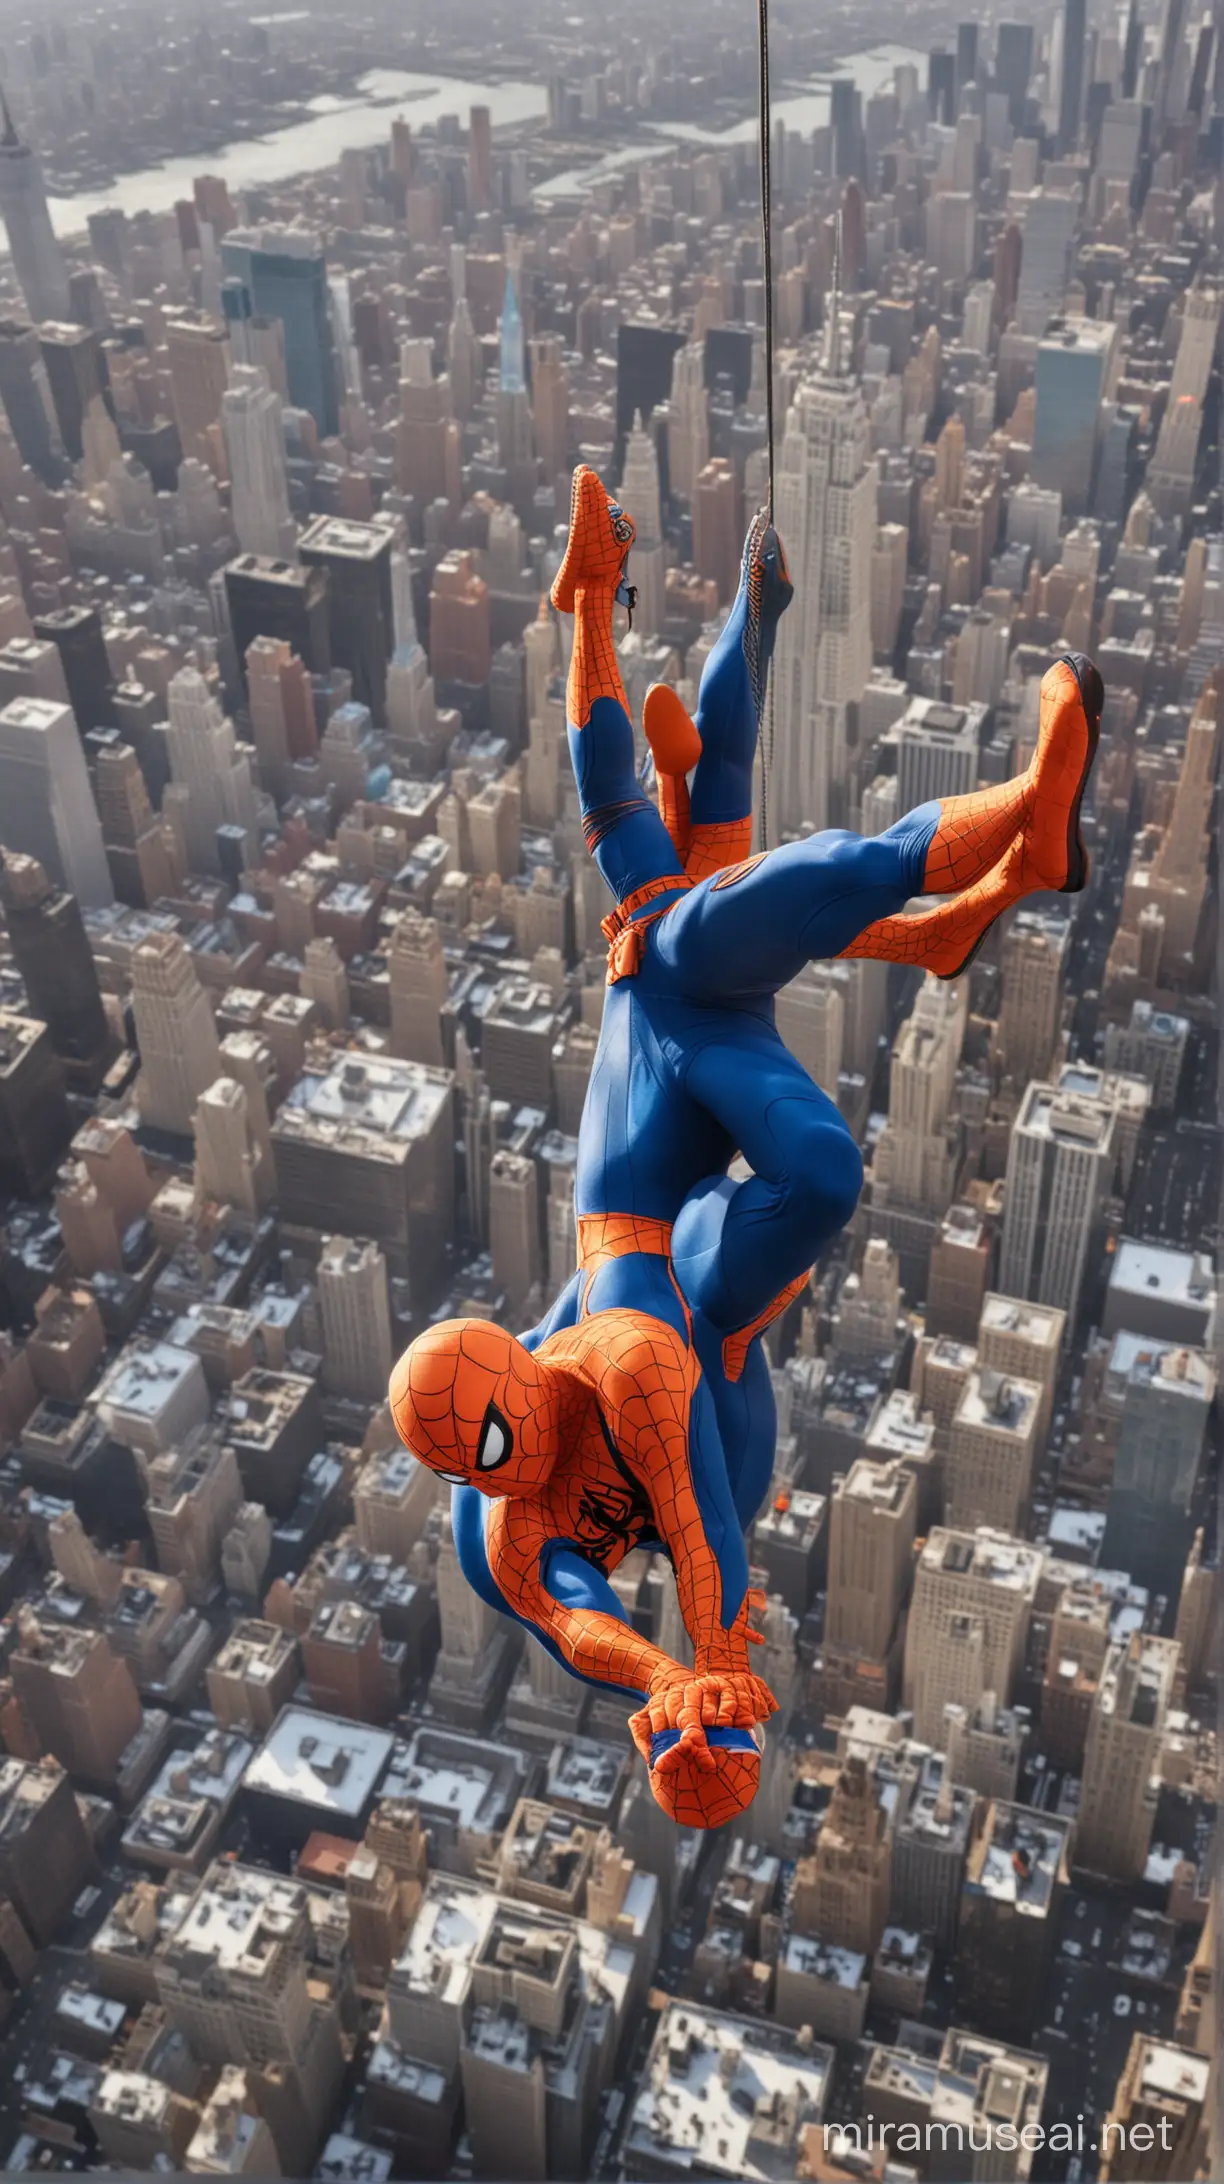 SpiderMan Swinging off Empire State Building in New York Mets Cap